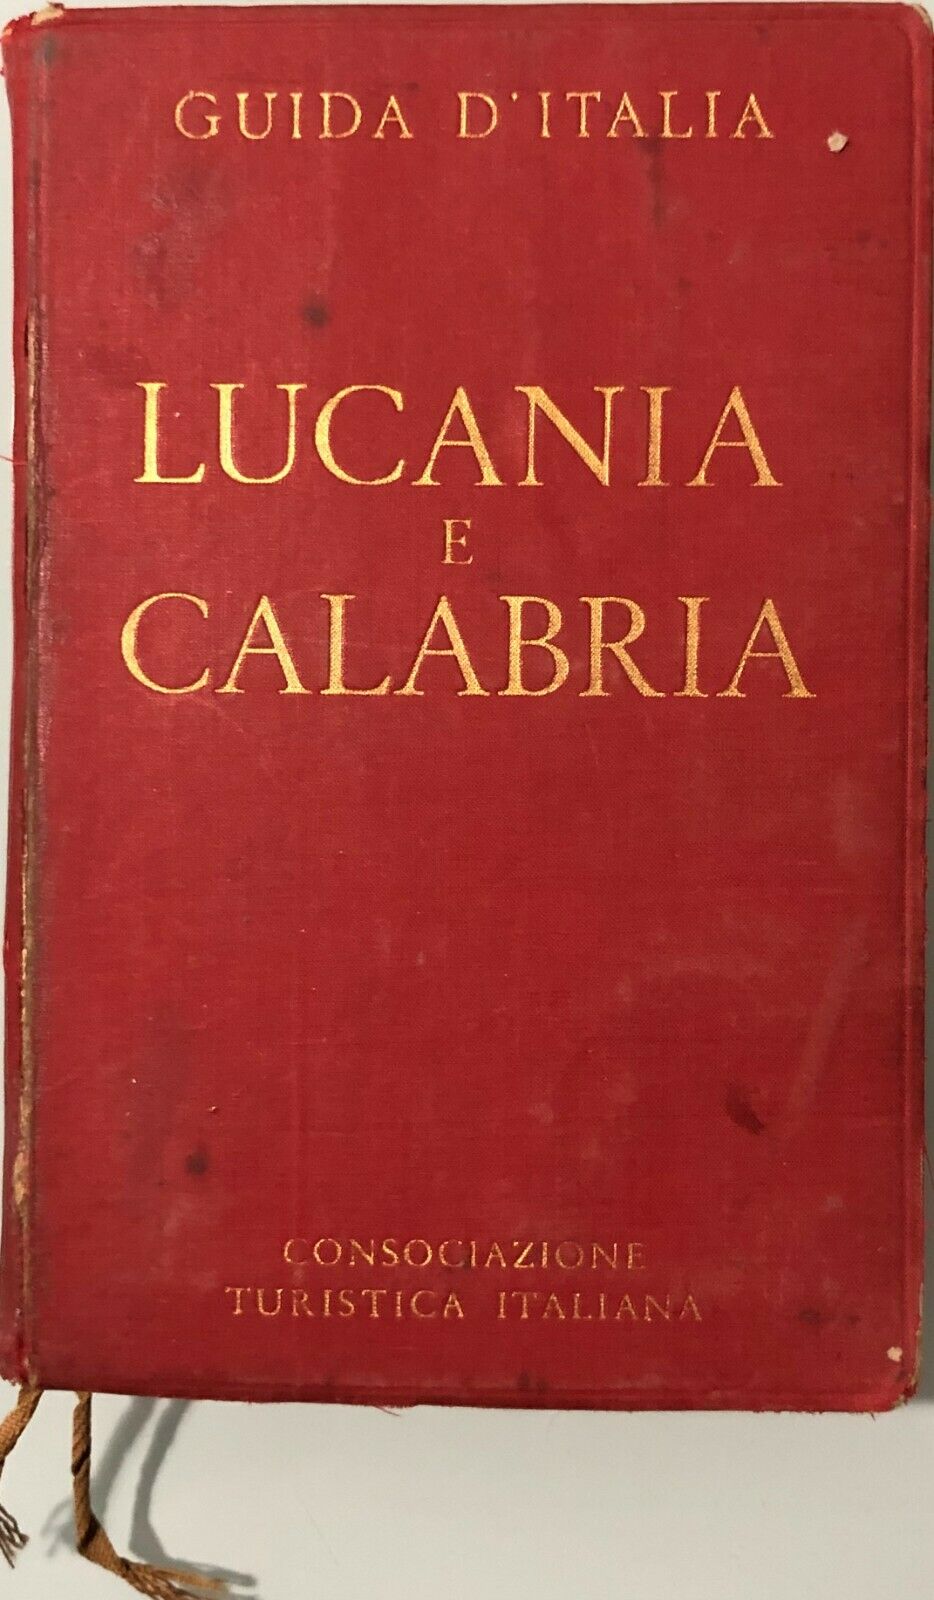 Guida d'Italia - Lucania e Calabria di L.V. Bertarelli, 1947, CTI